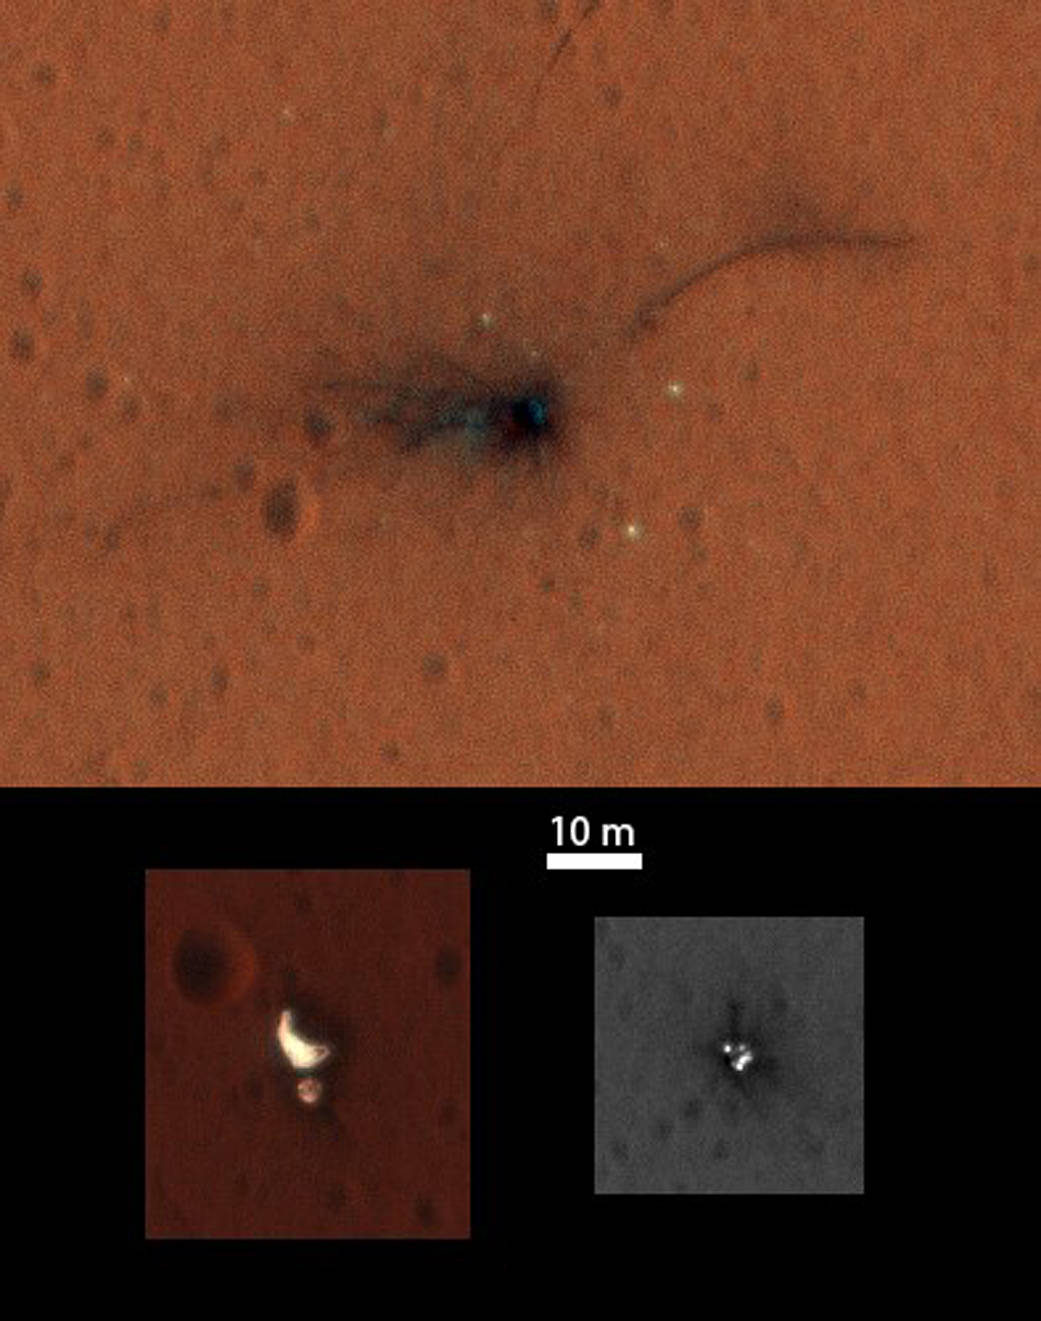 NASA's Mars Reconnaissance Orbiter observed the impact site of Europe's Schiaparelli test lander